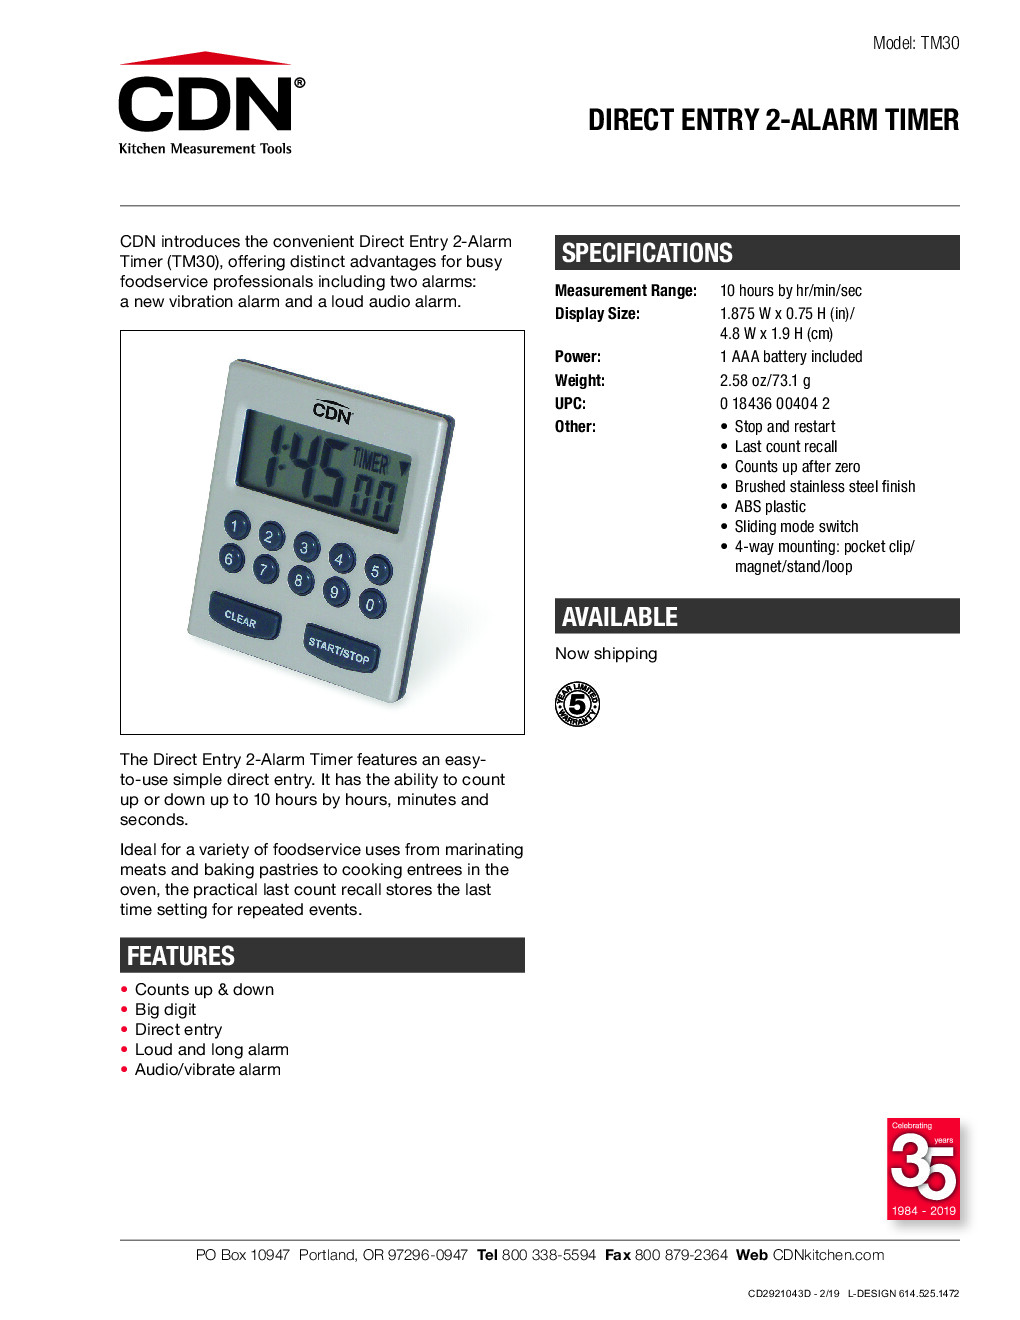 CDN TM30 Alarm Timer,Direct Entry,2-Alarm,Audio/Vibrate Alarm